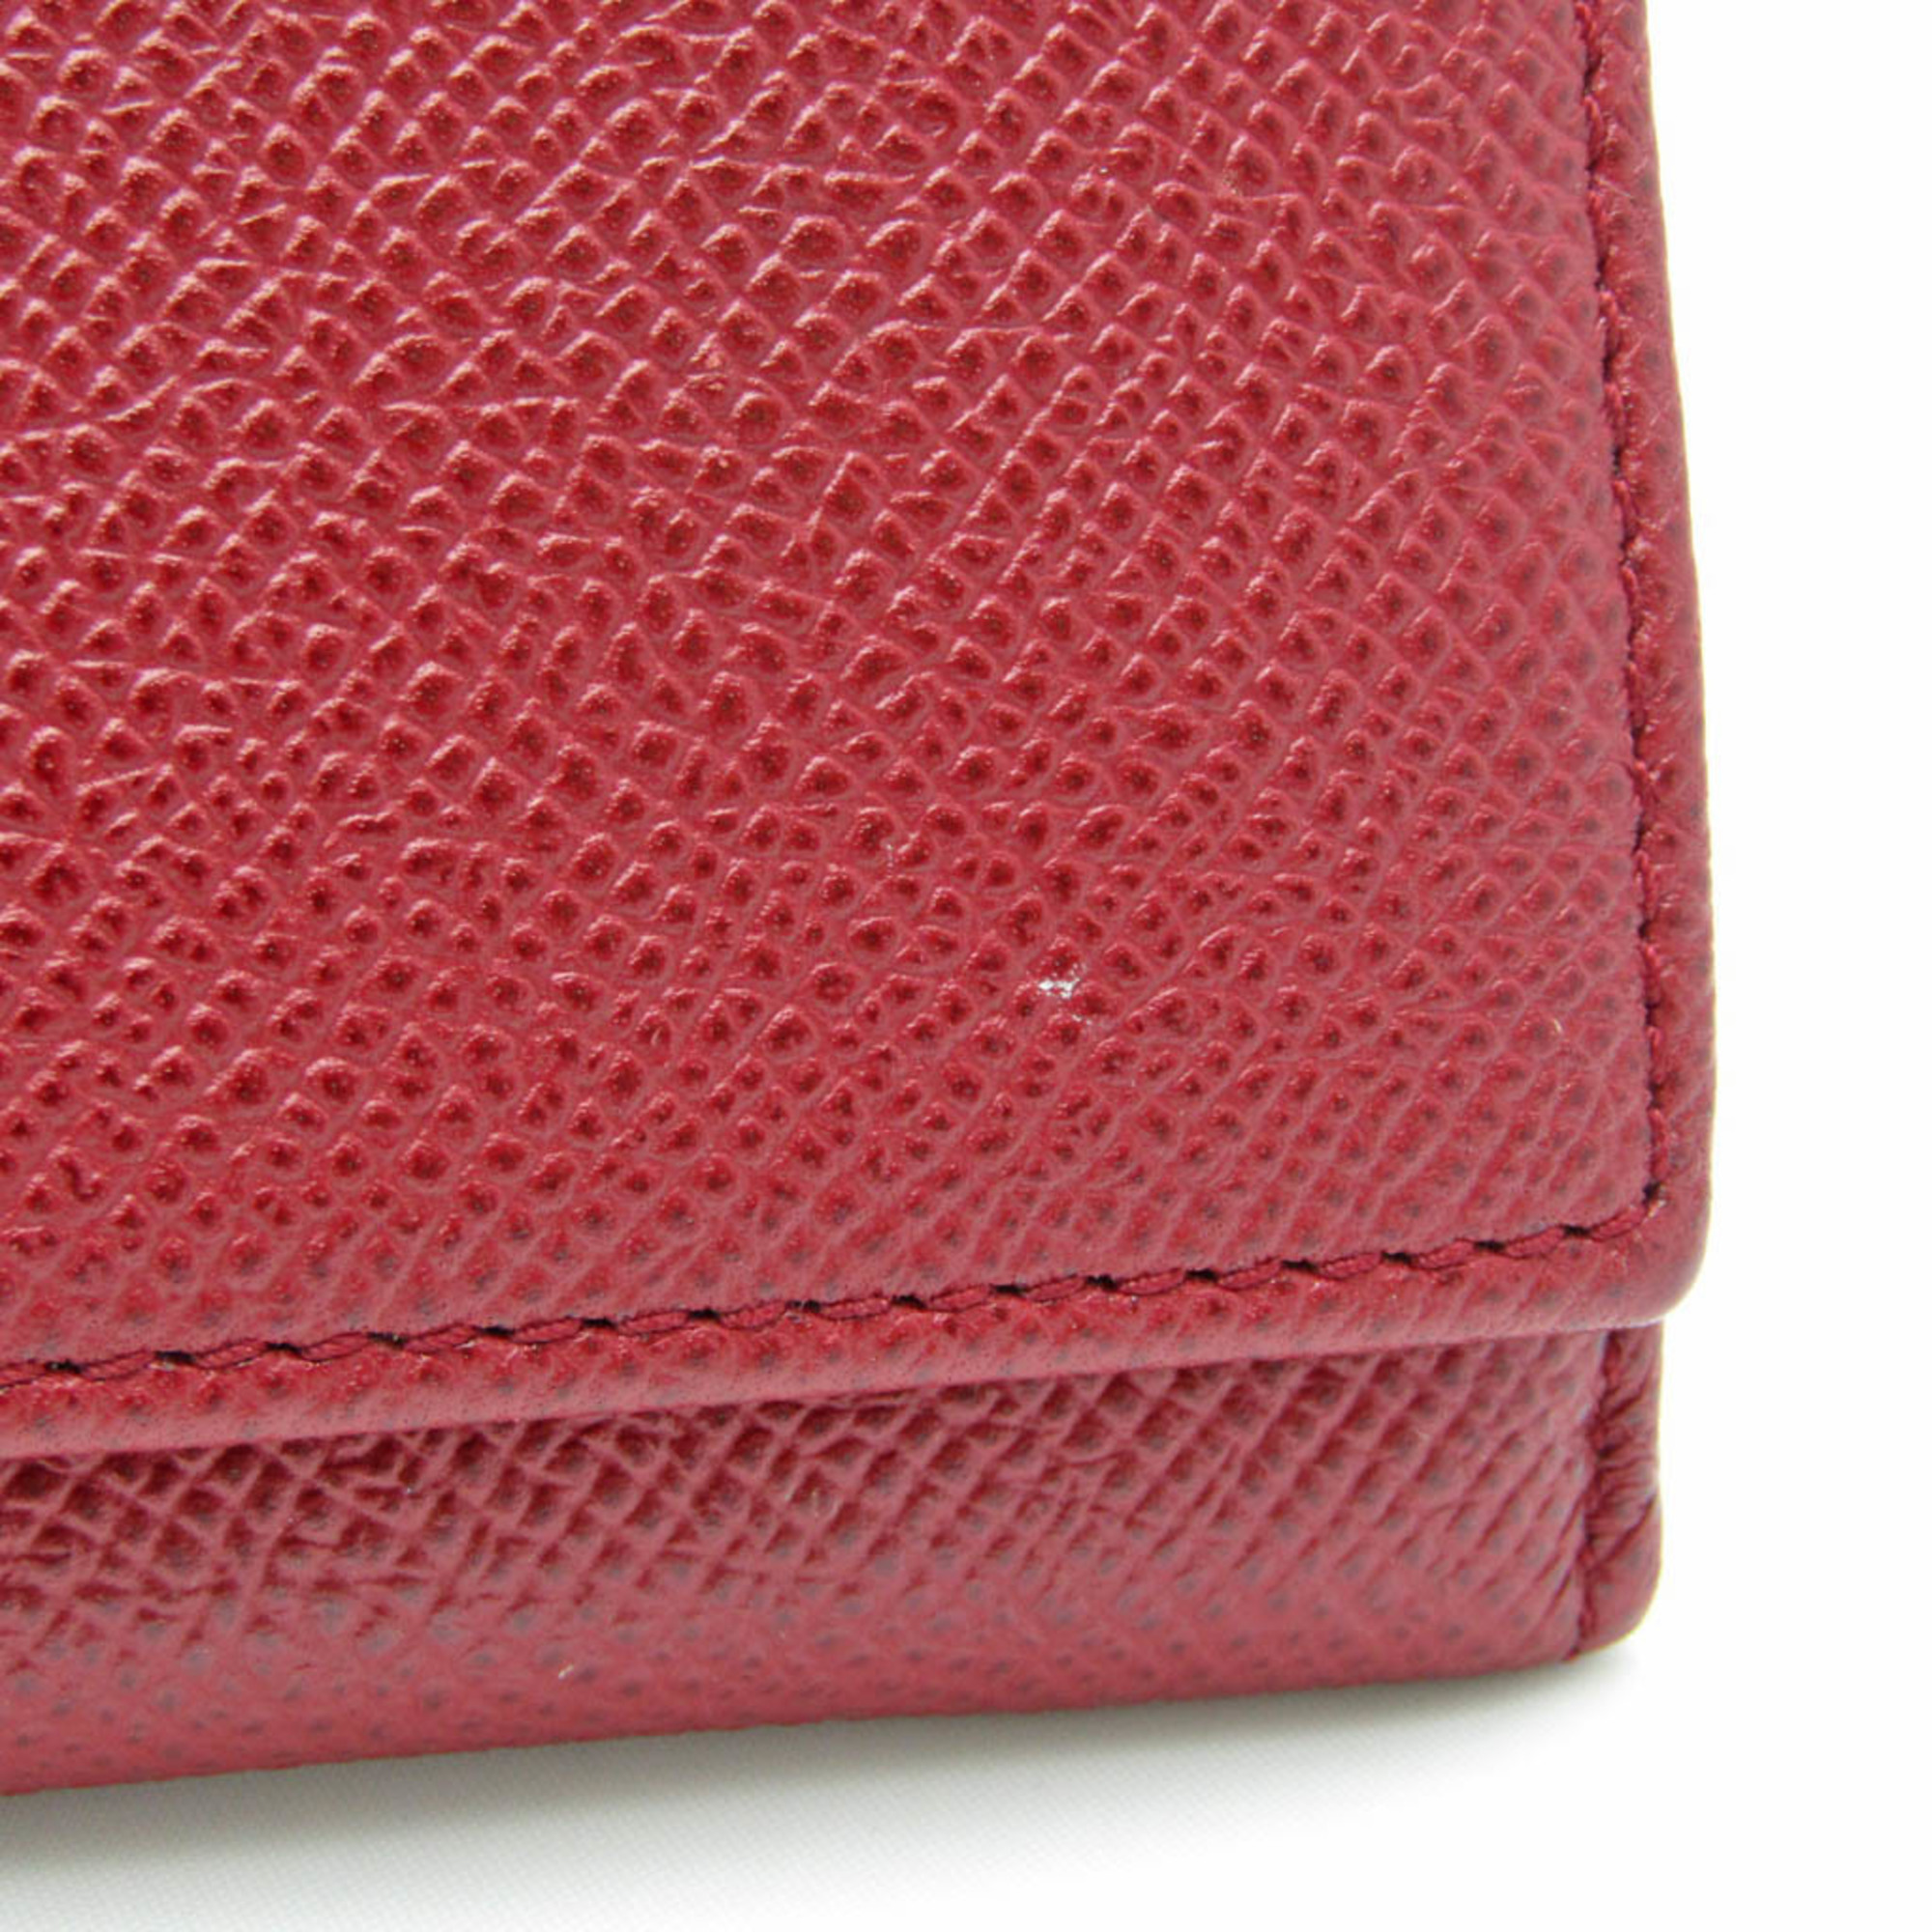 Bvlgari Logo Clip 33888 Women's Leather Long Wallet (bi-fold) Dark Red